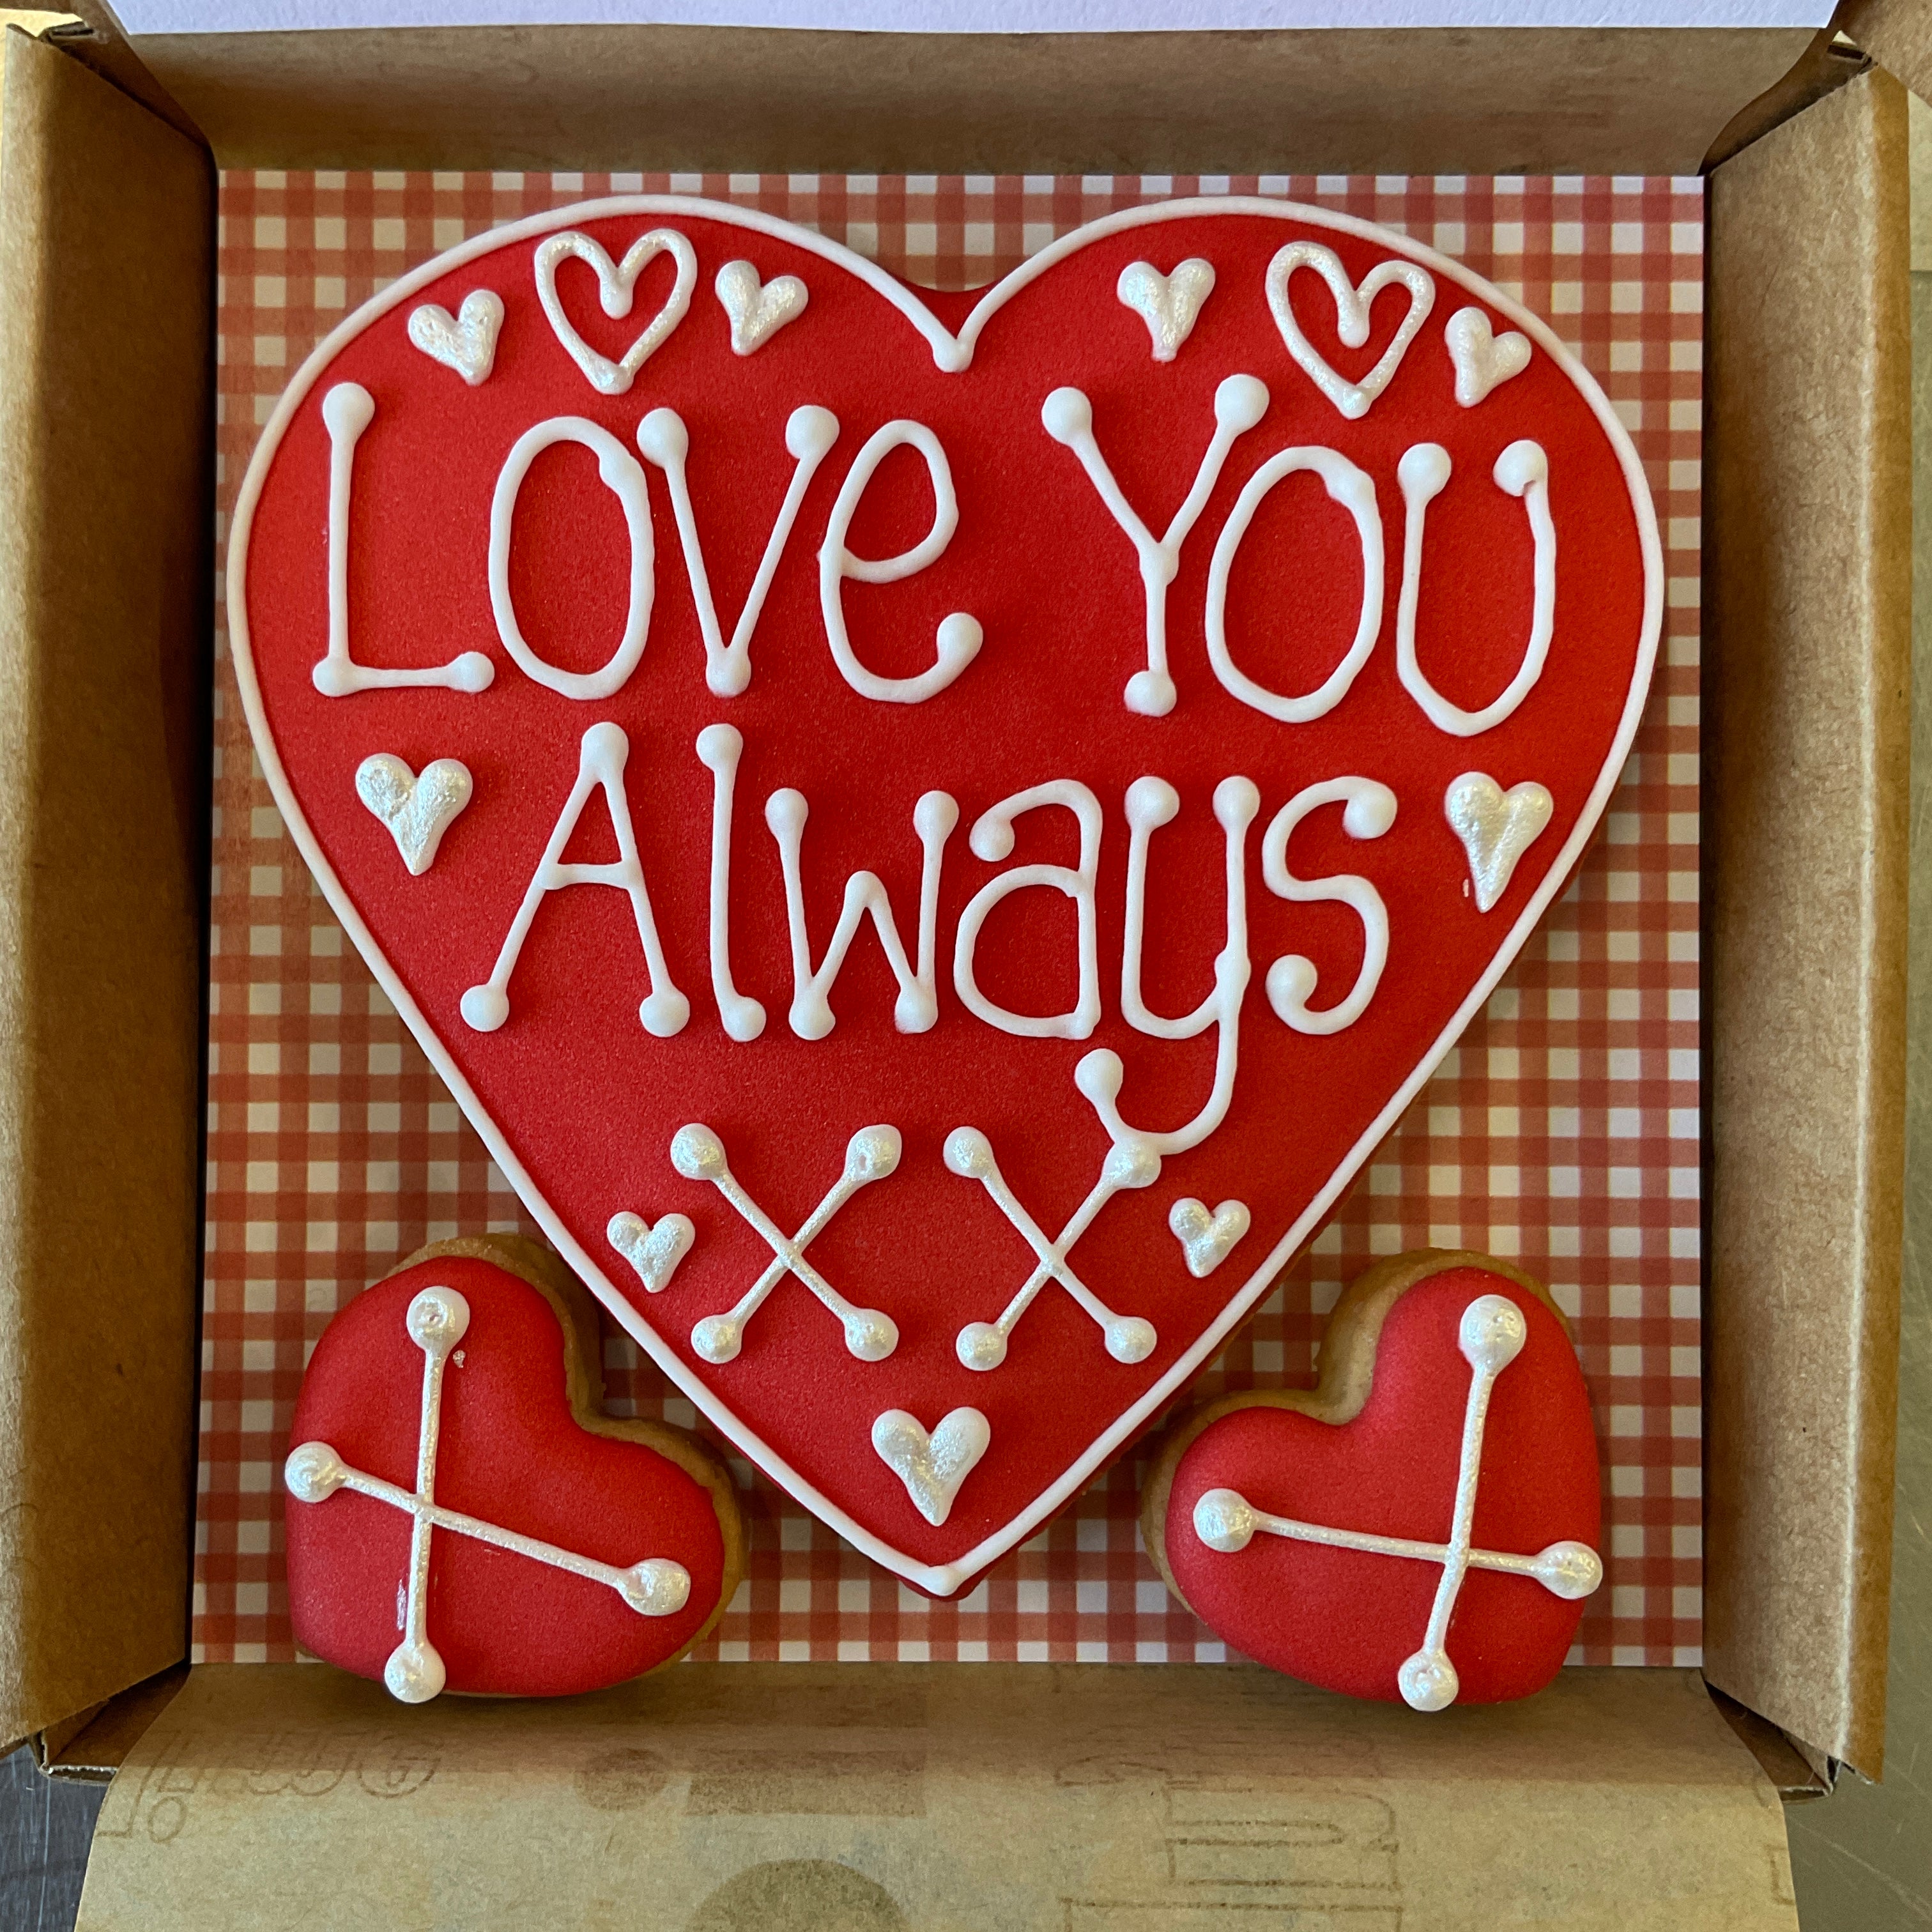 Love Heart Cookie Card